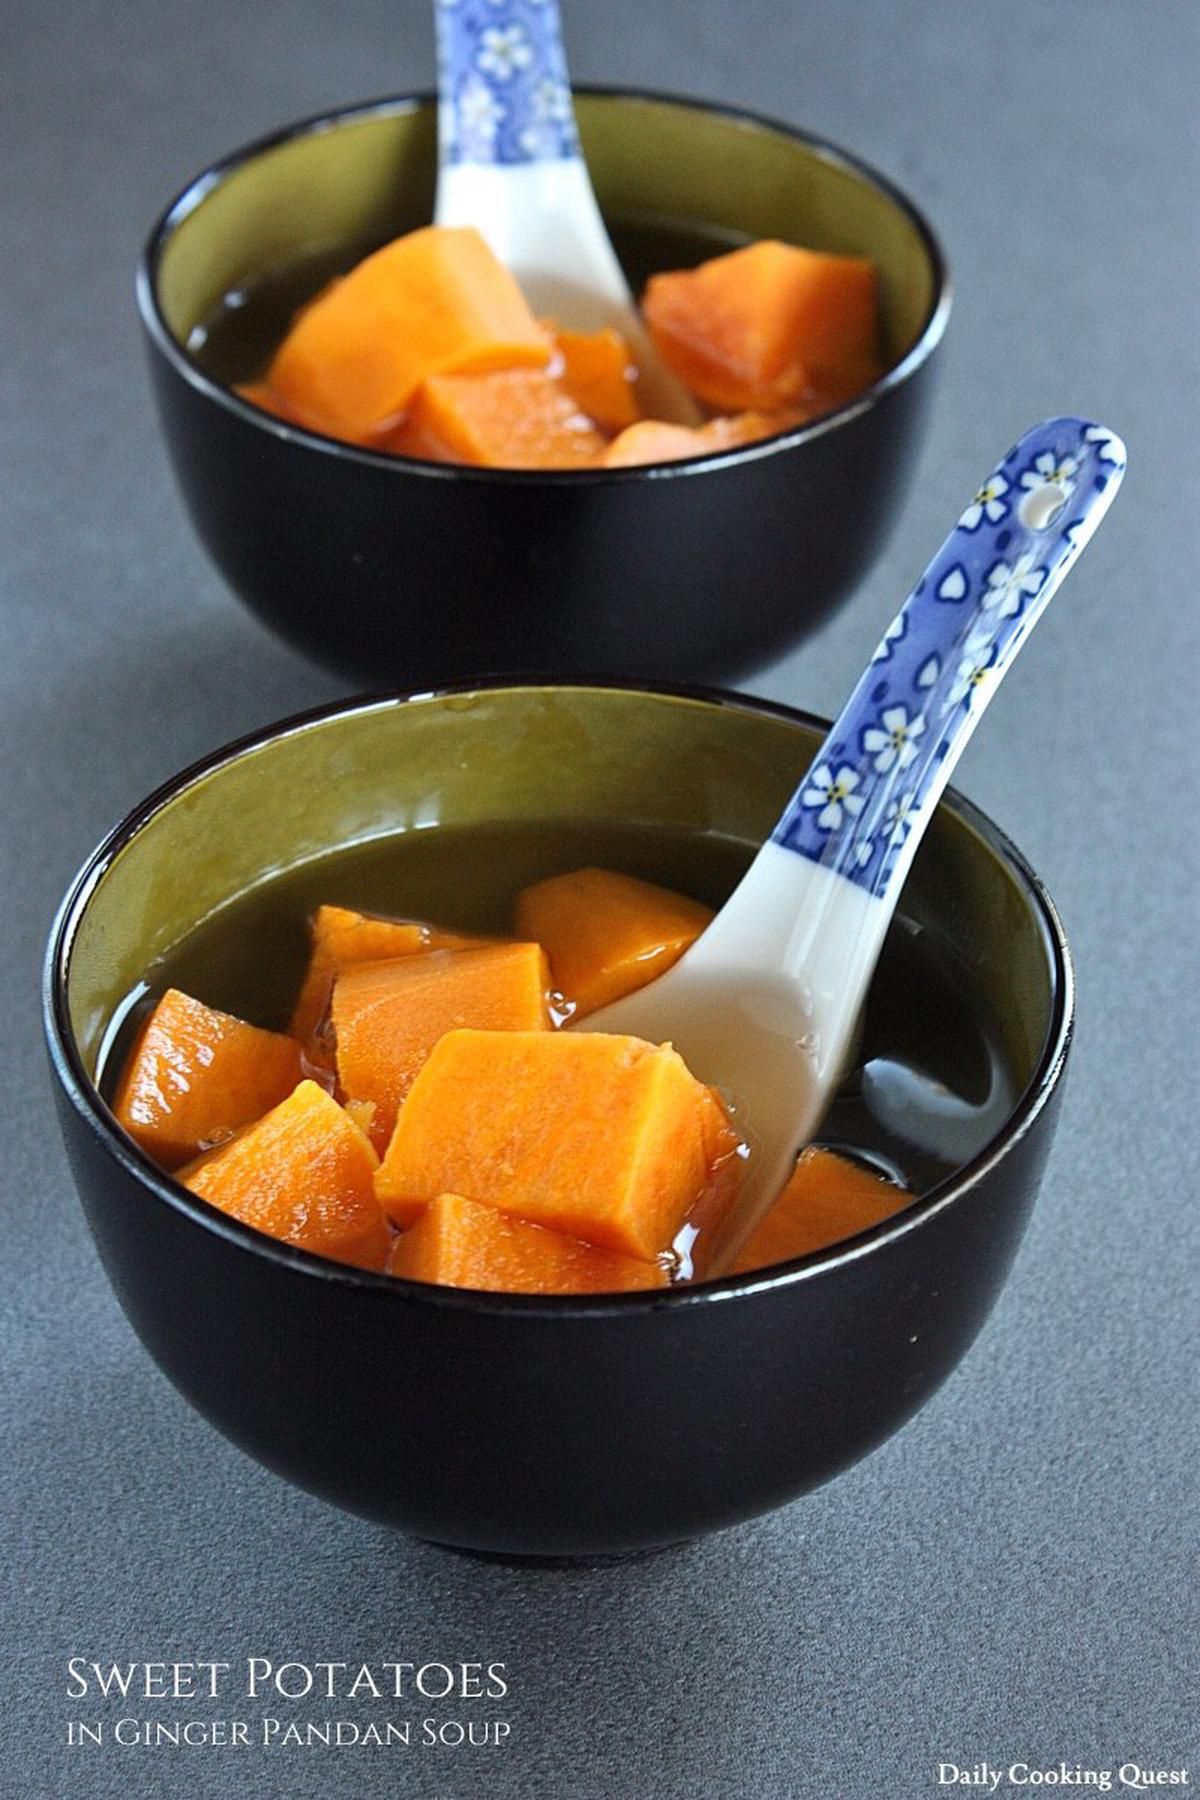 Sweet Potatoes in Ginger Pandan Soup